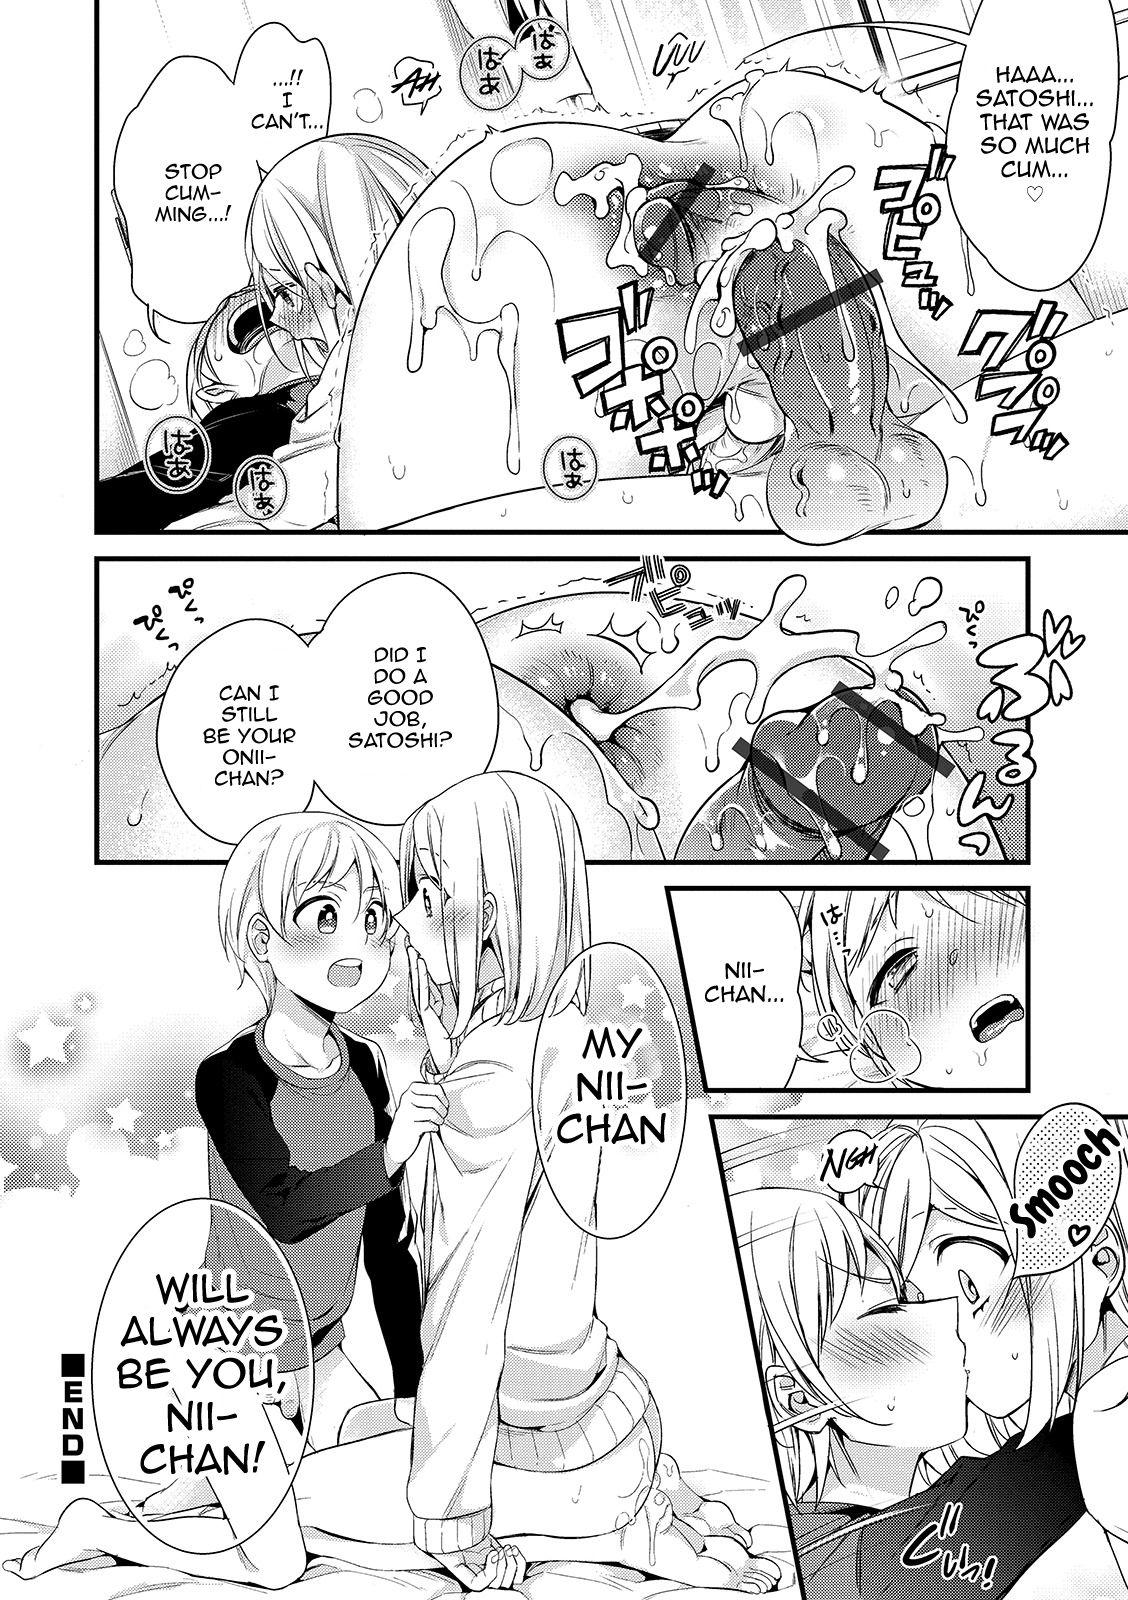 Culonas Onii-chan nan dakara 2 Bokep - Page 16